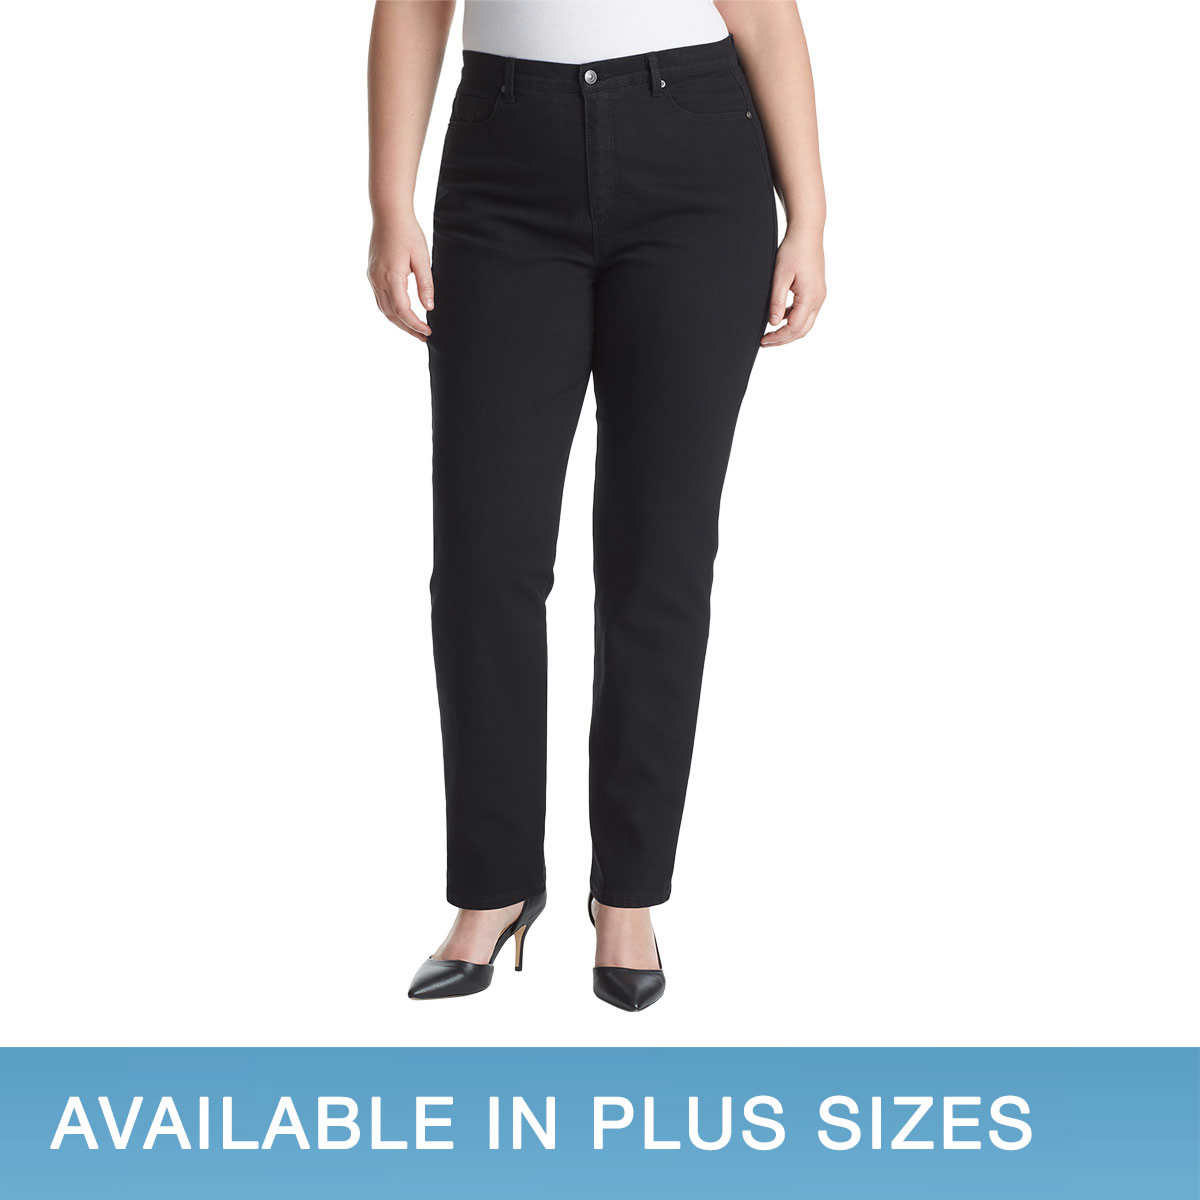 Many Sizes Beige NWT Gloria Vanderbilt Amanda Original Slimming Jeans